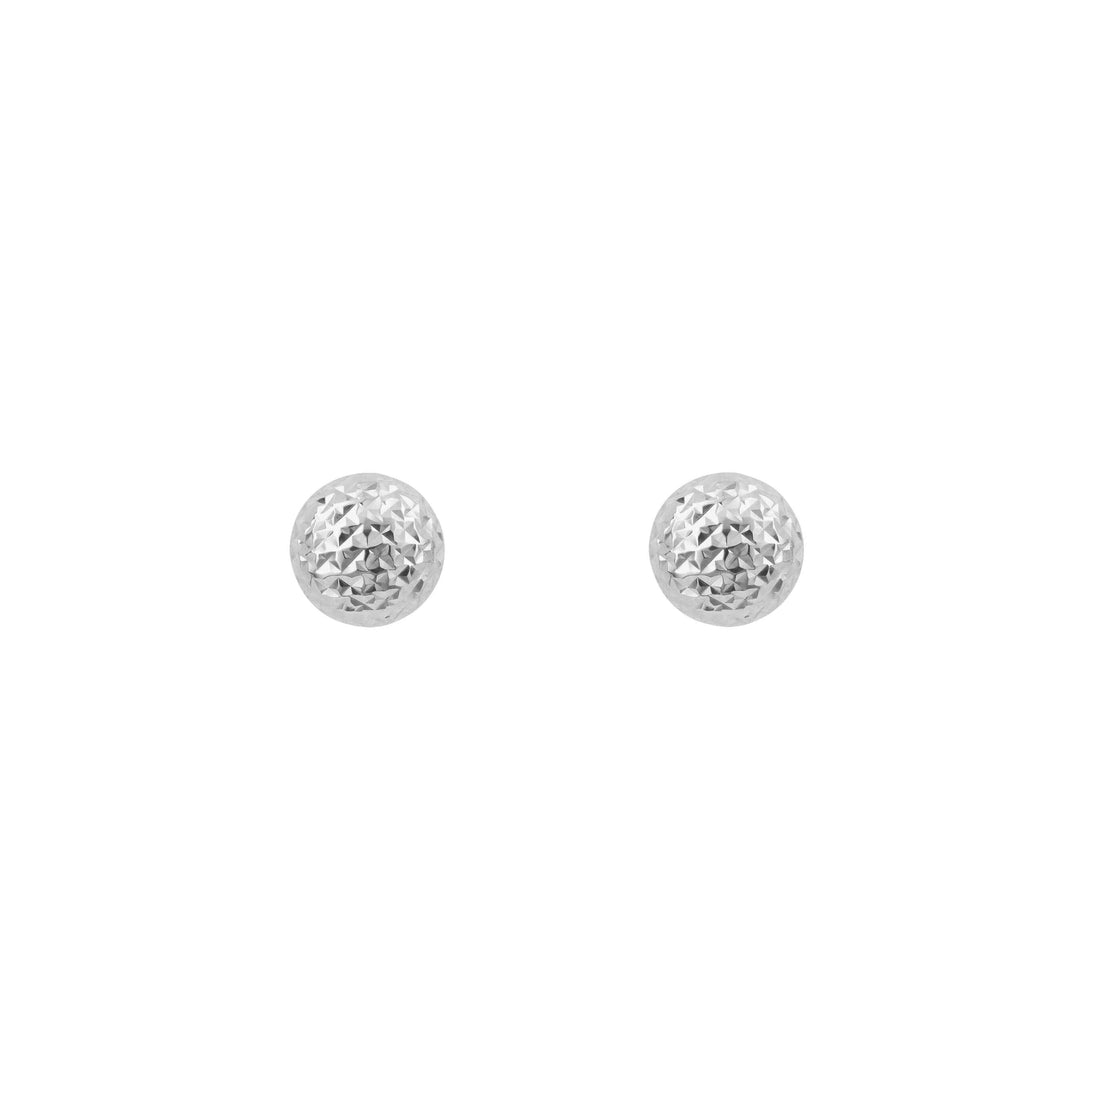 Textured Ball Stud Earrings in 9ct White Gold - Robert Anthony Jewellers, Edinburgh